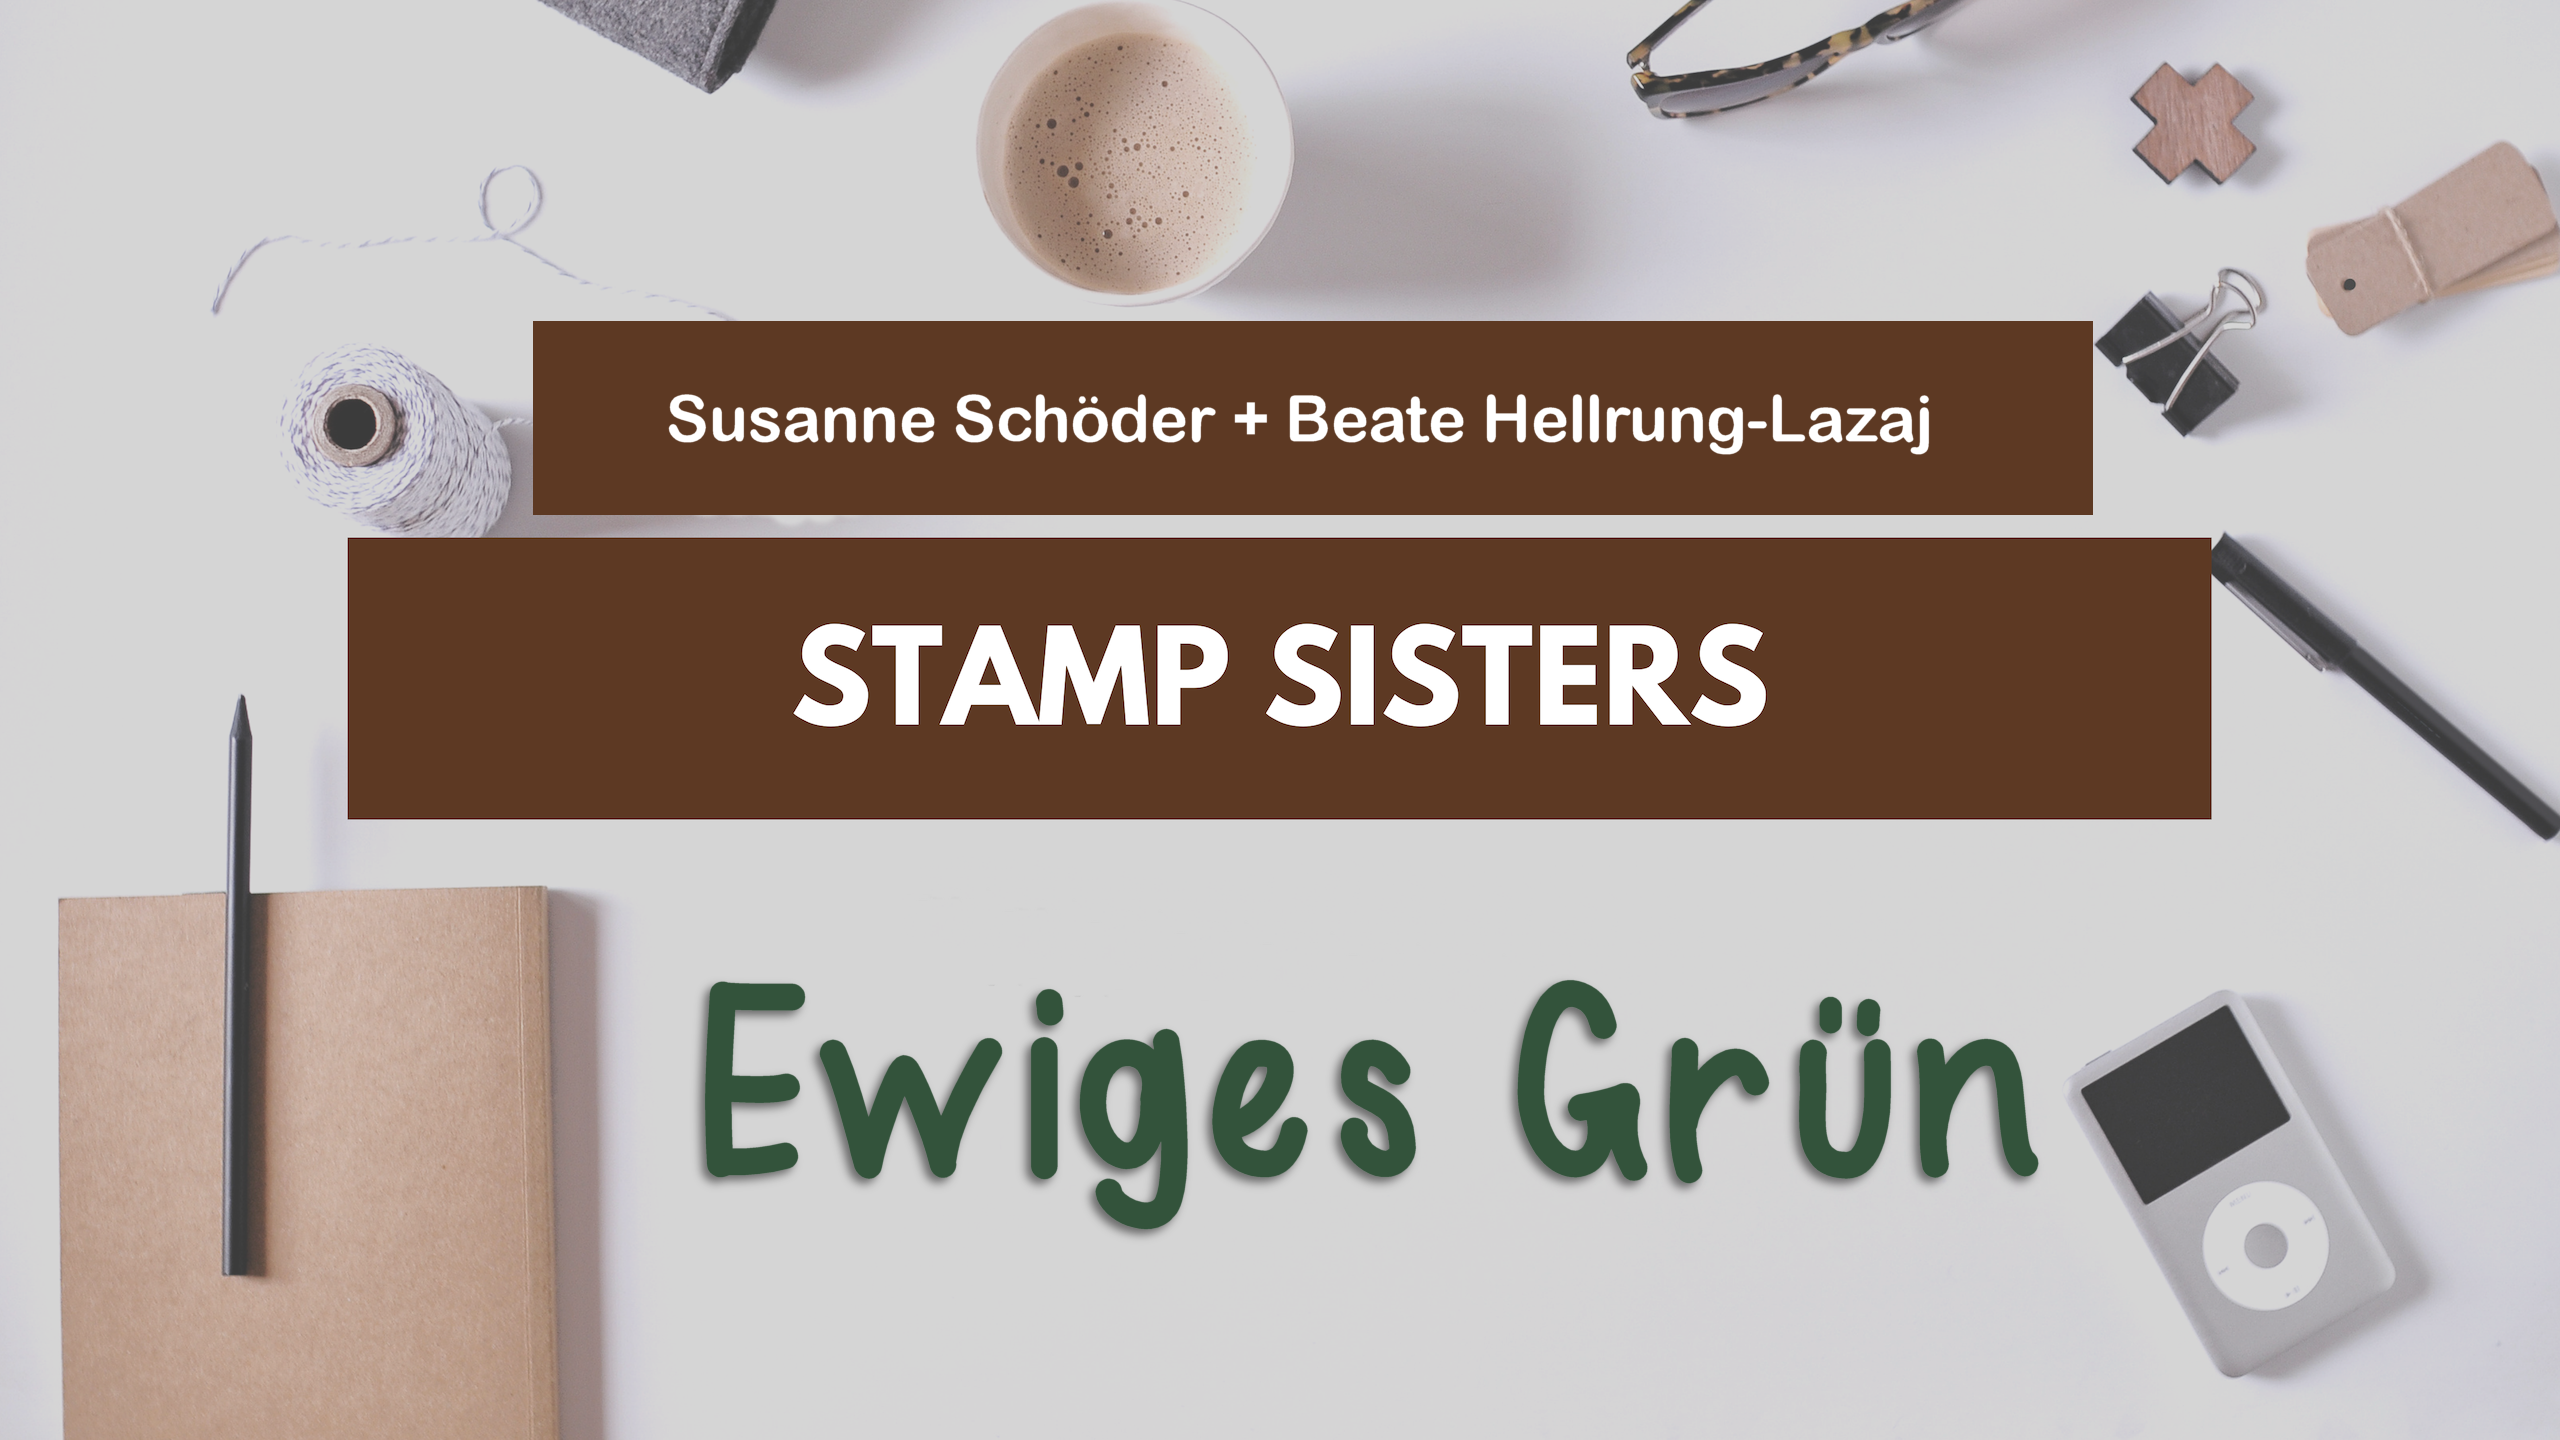 Stamp Sisters - Produktreihe Ewiges Grün